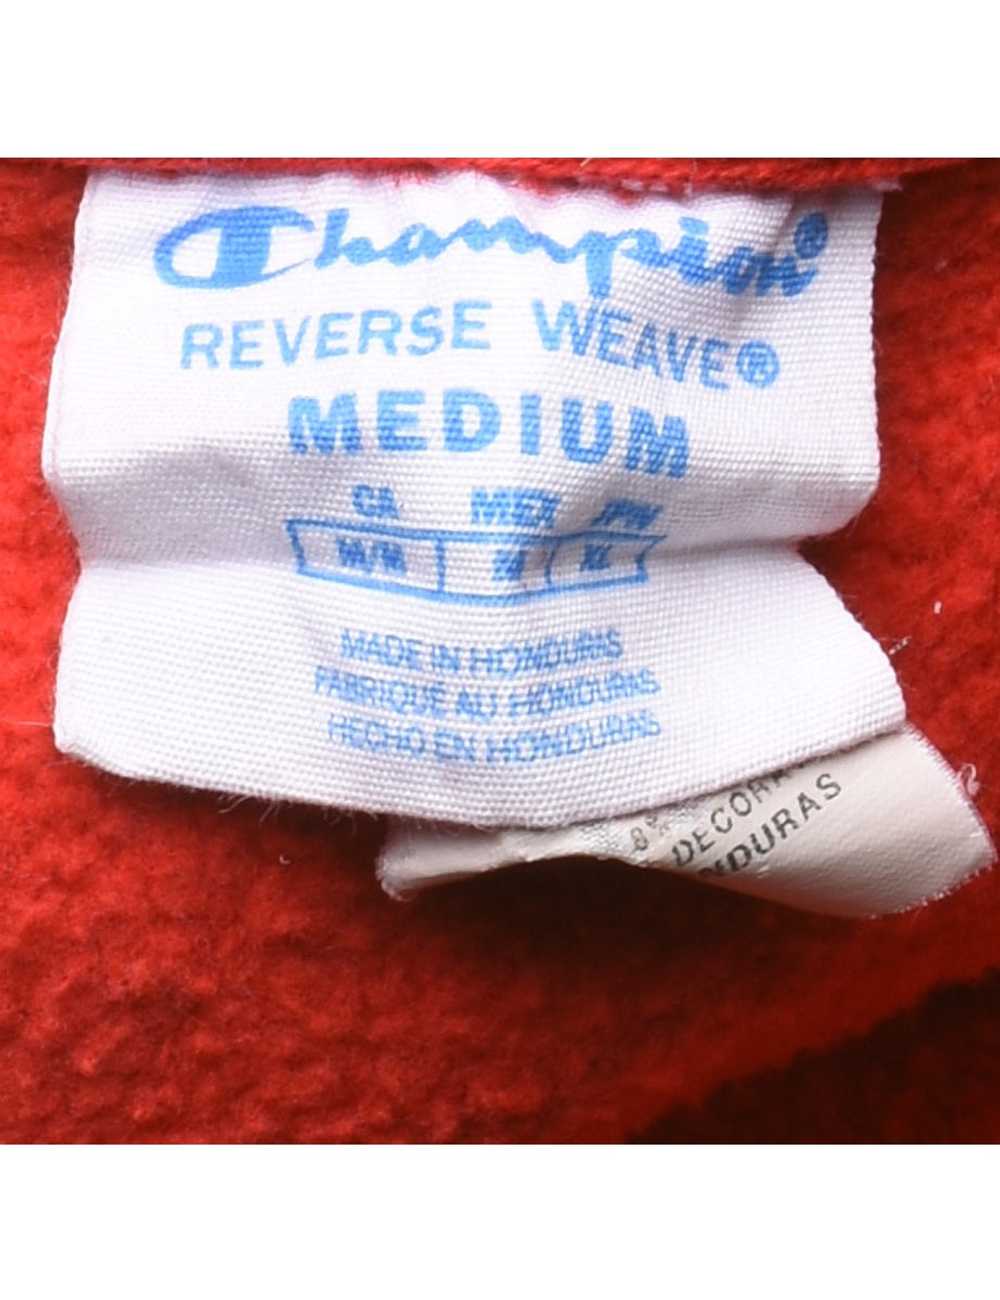 Champion Reverse Weave Red Printed Hoodie - M - image 4